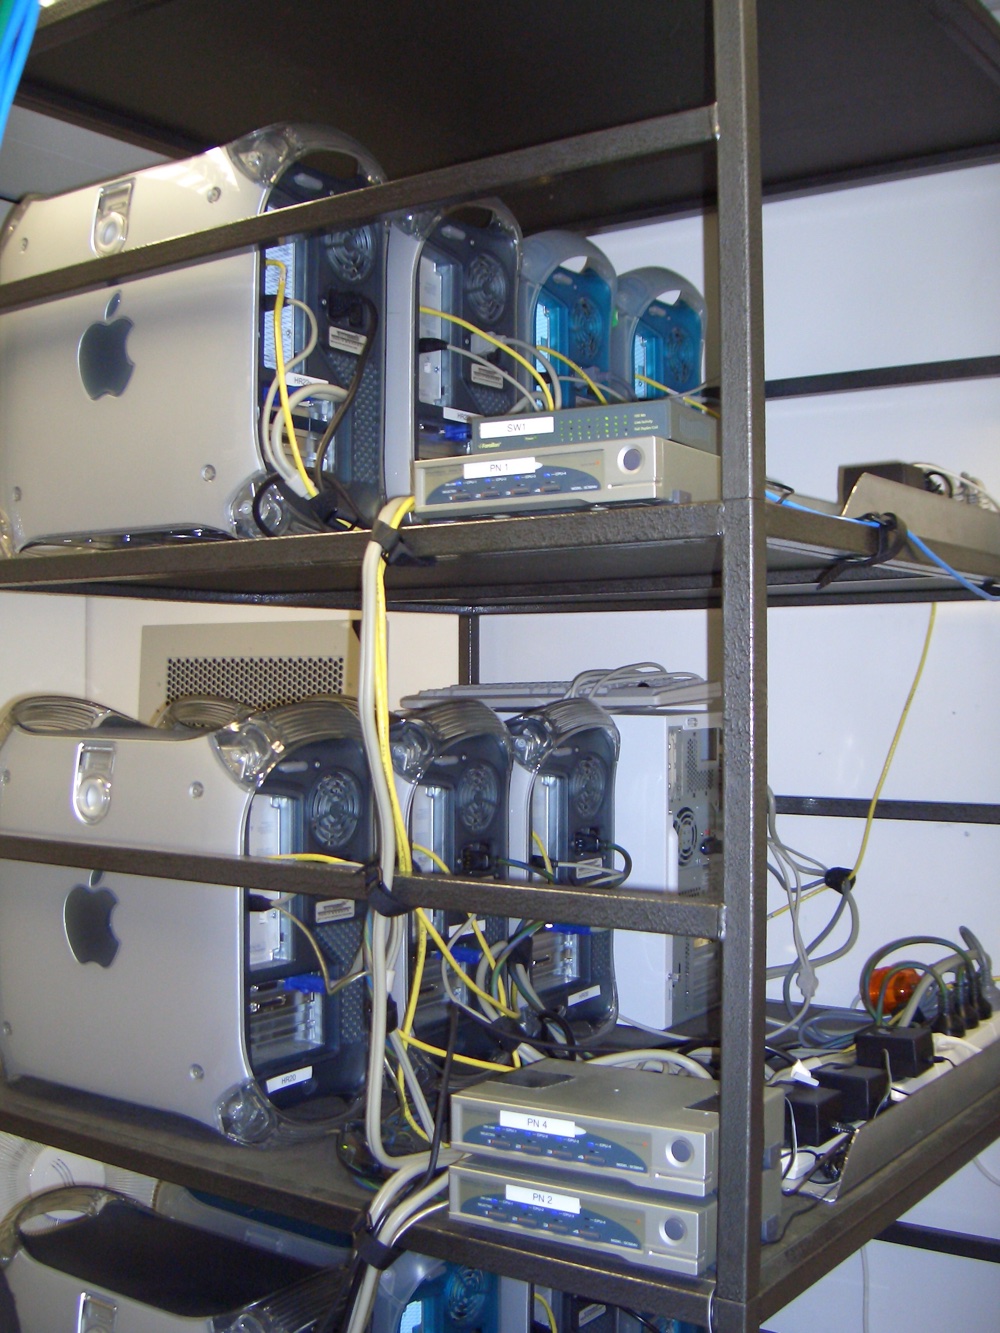 Rack of Mac Computers